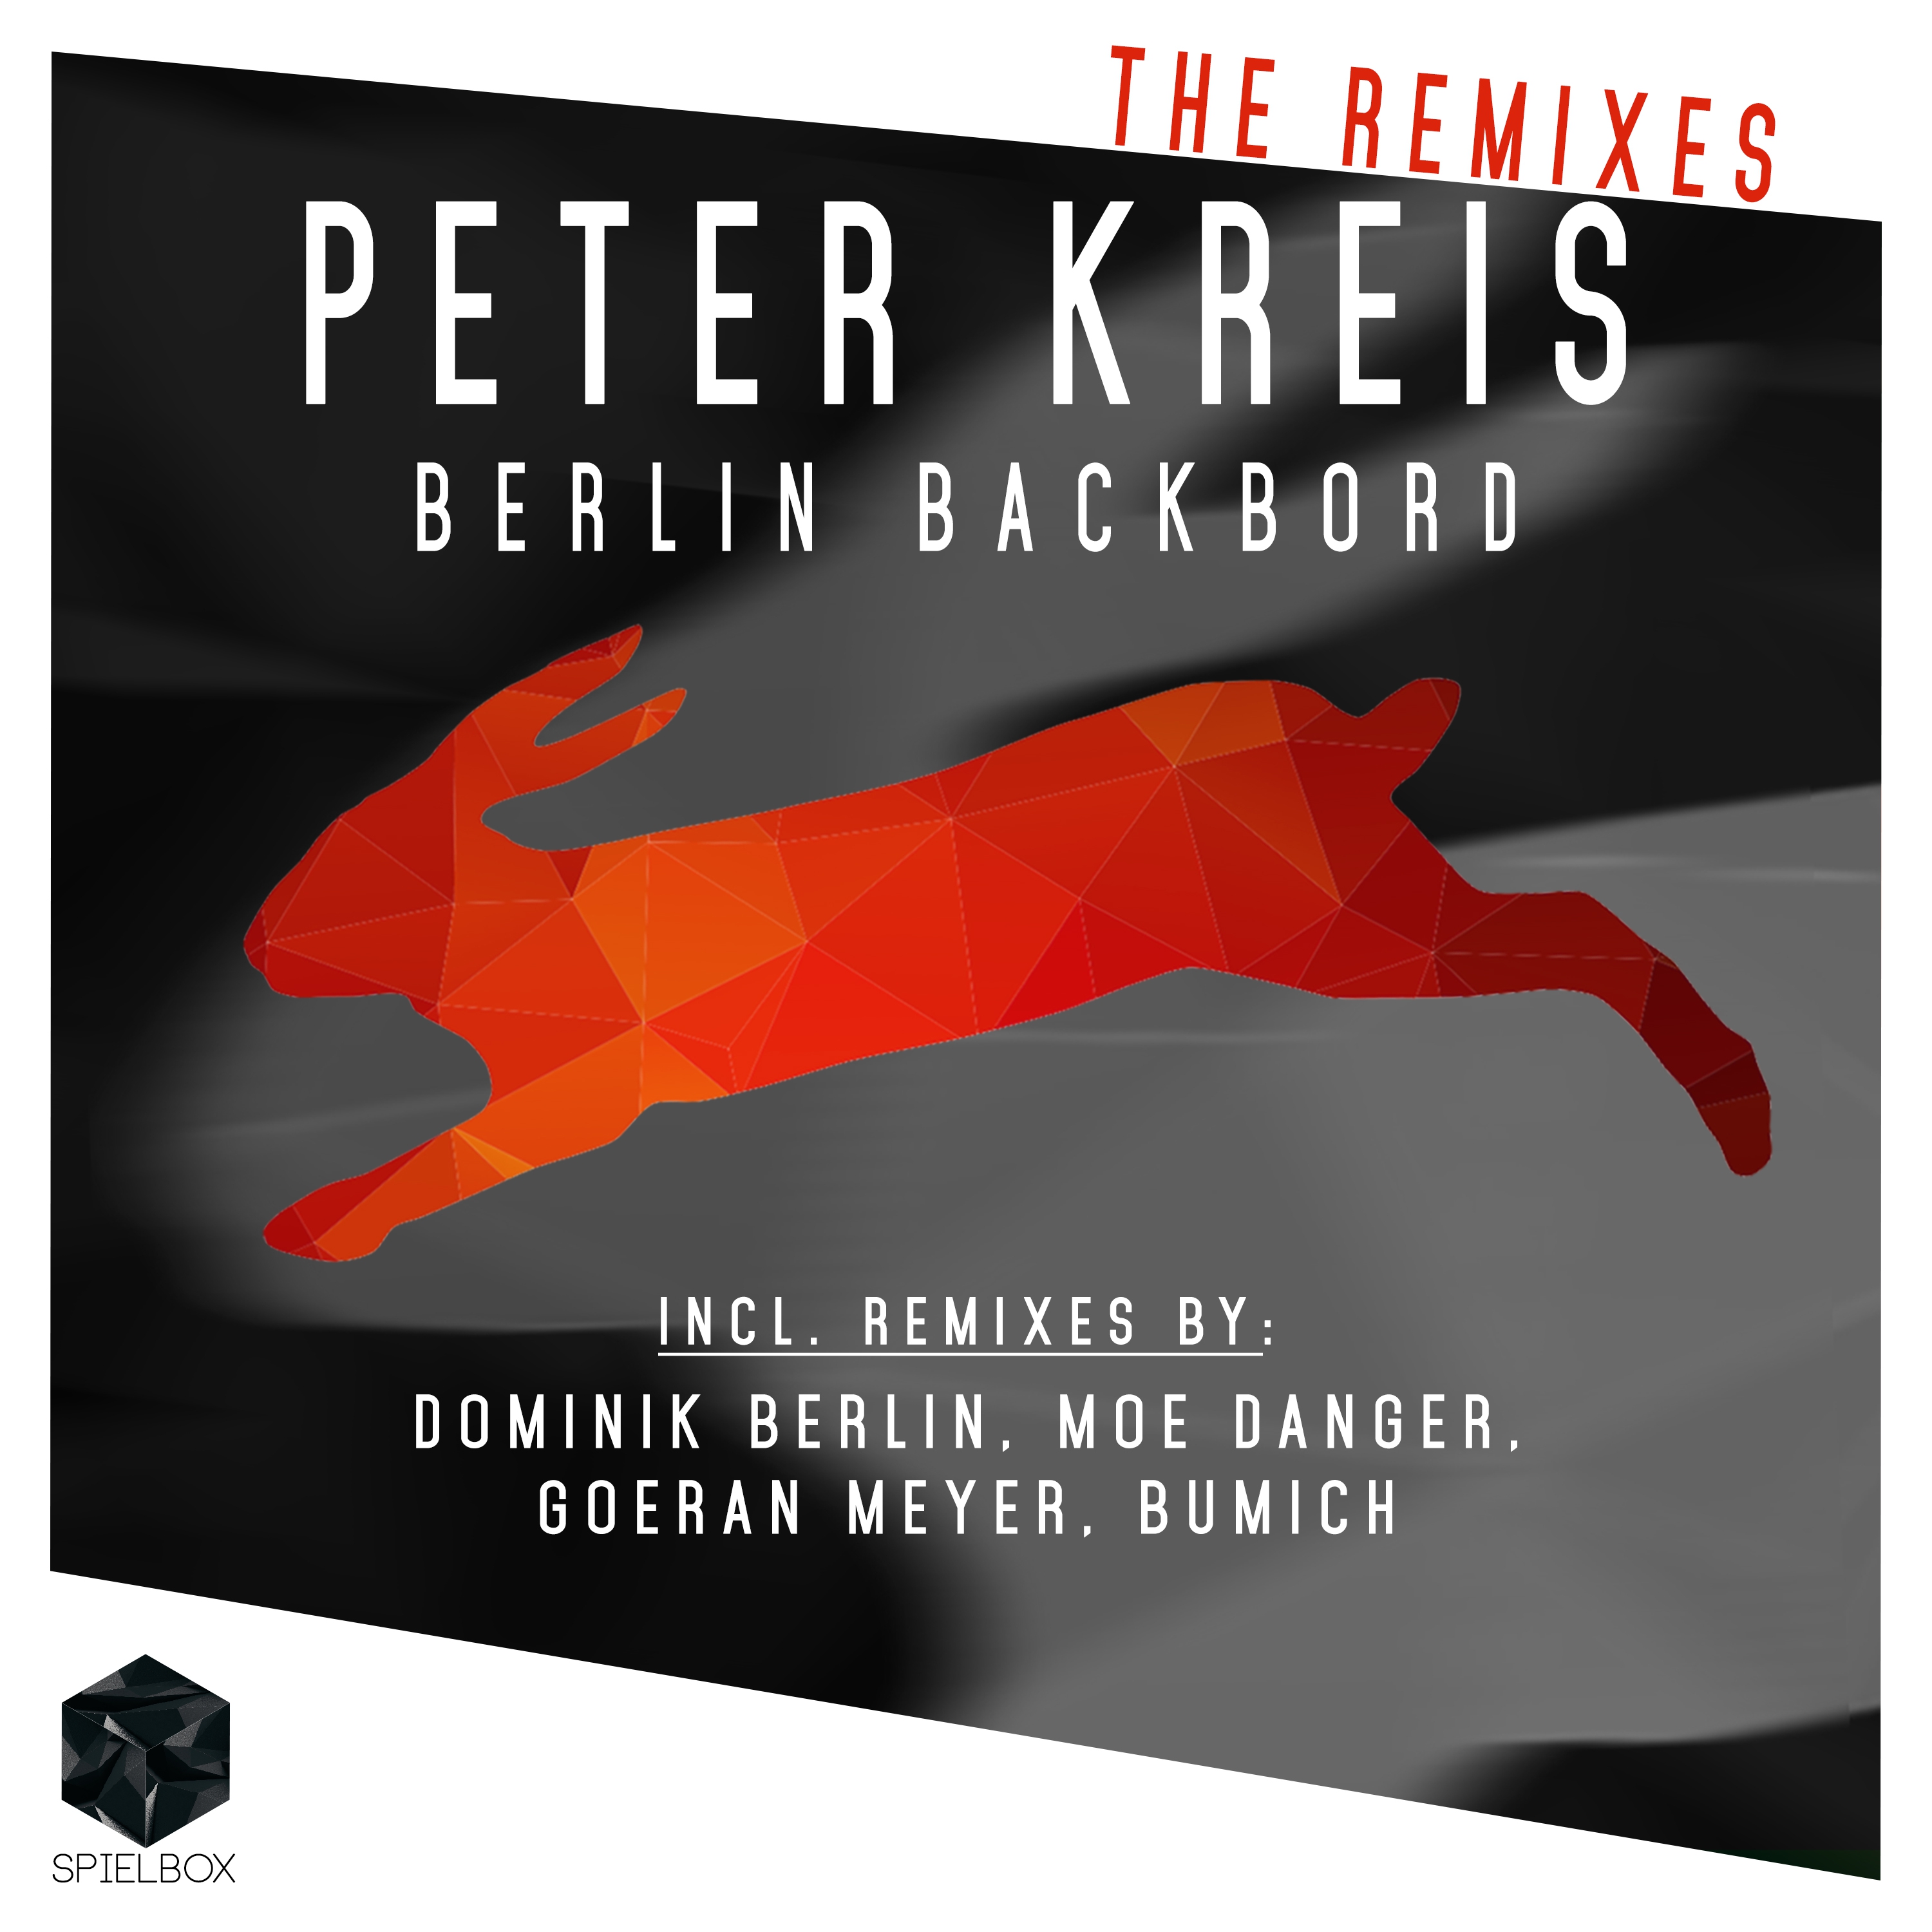 Berlin Backbord (The Remixes)